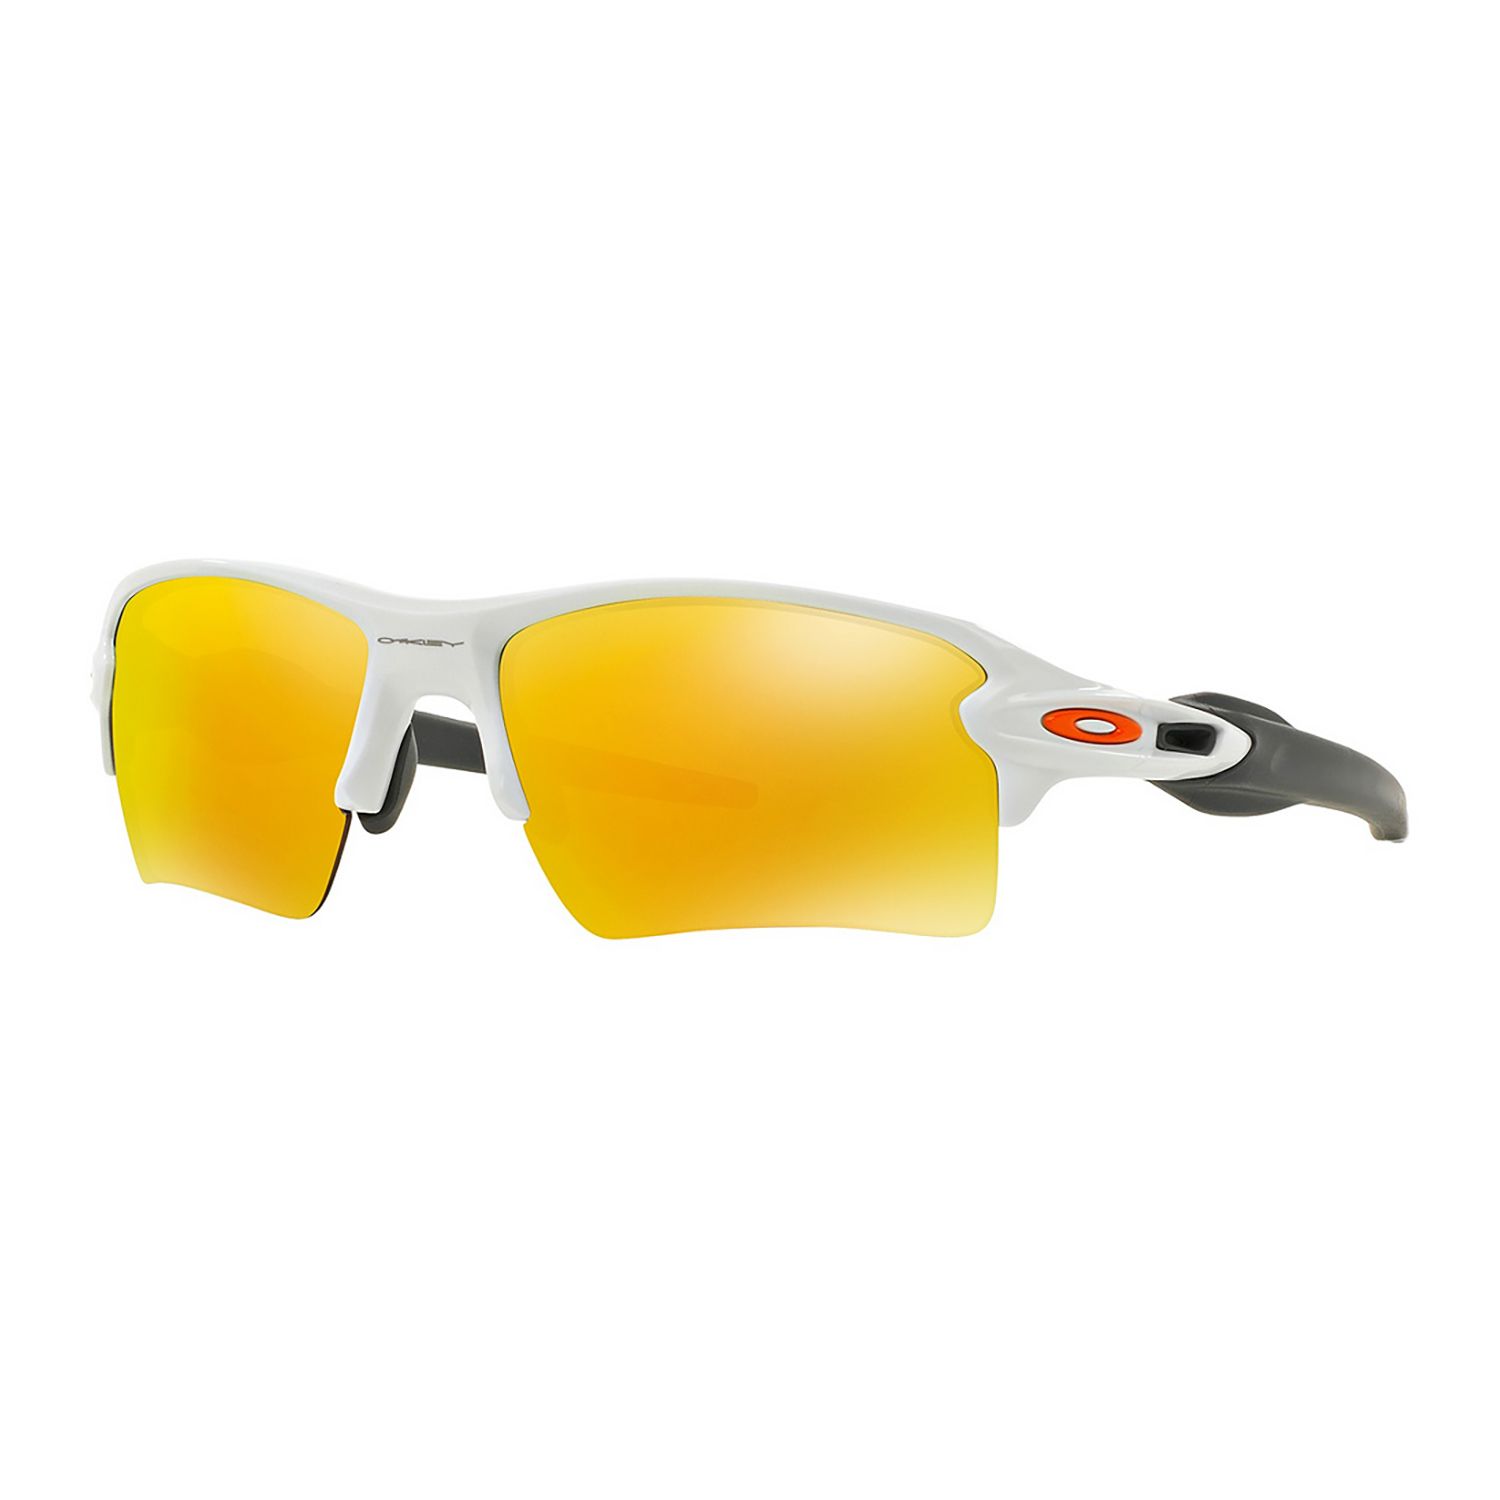 Oakley Flak 2.0 Sunglasses for Sale in Santa Clara, CA - OfferUp